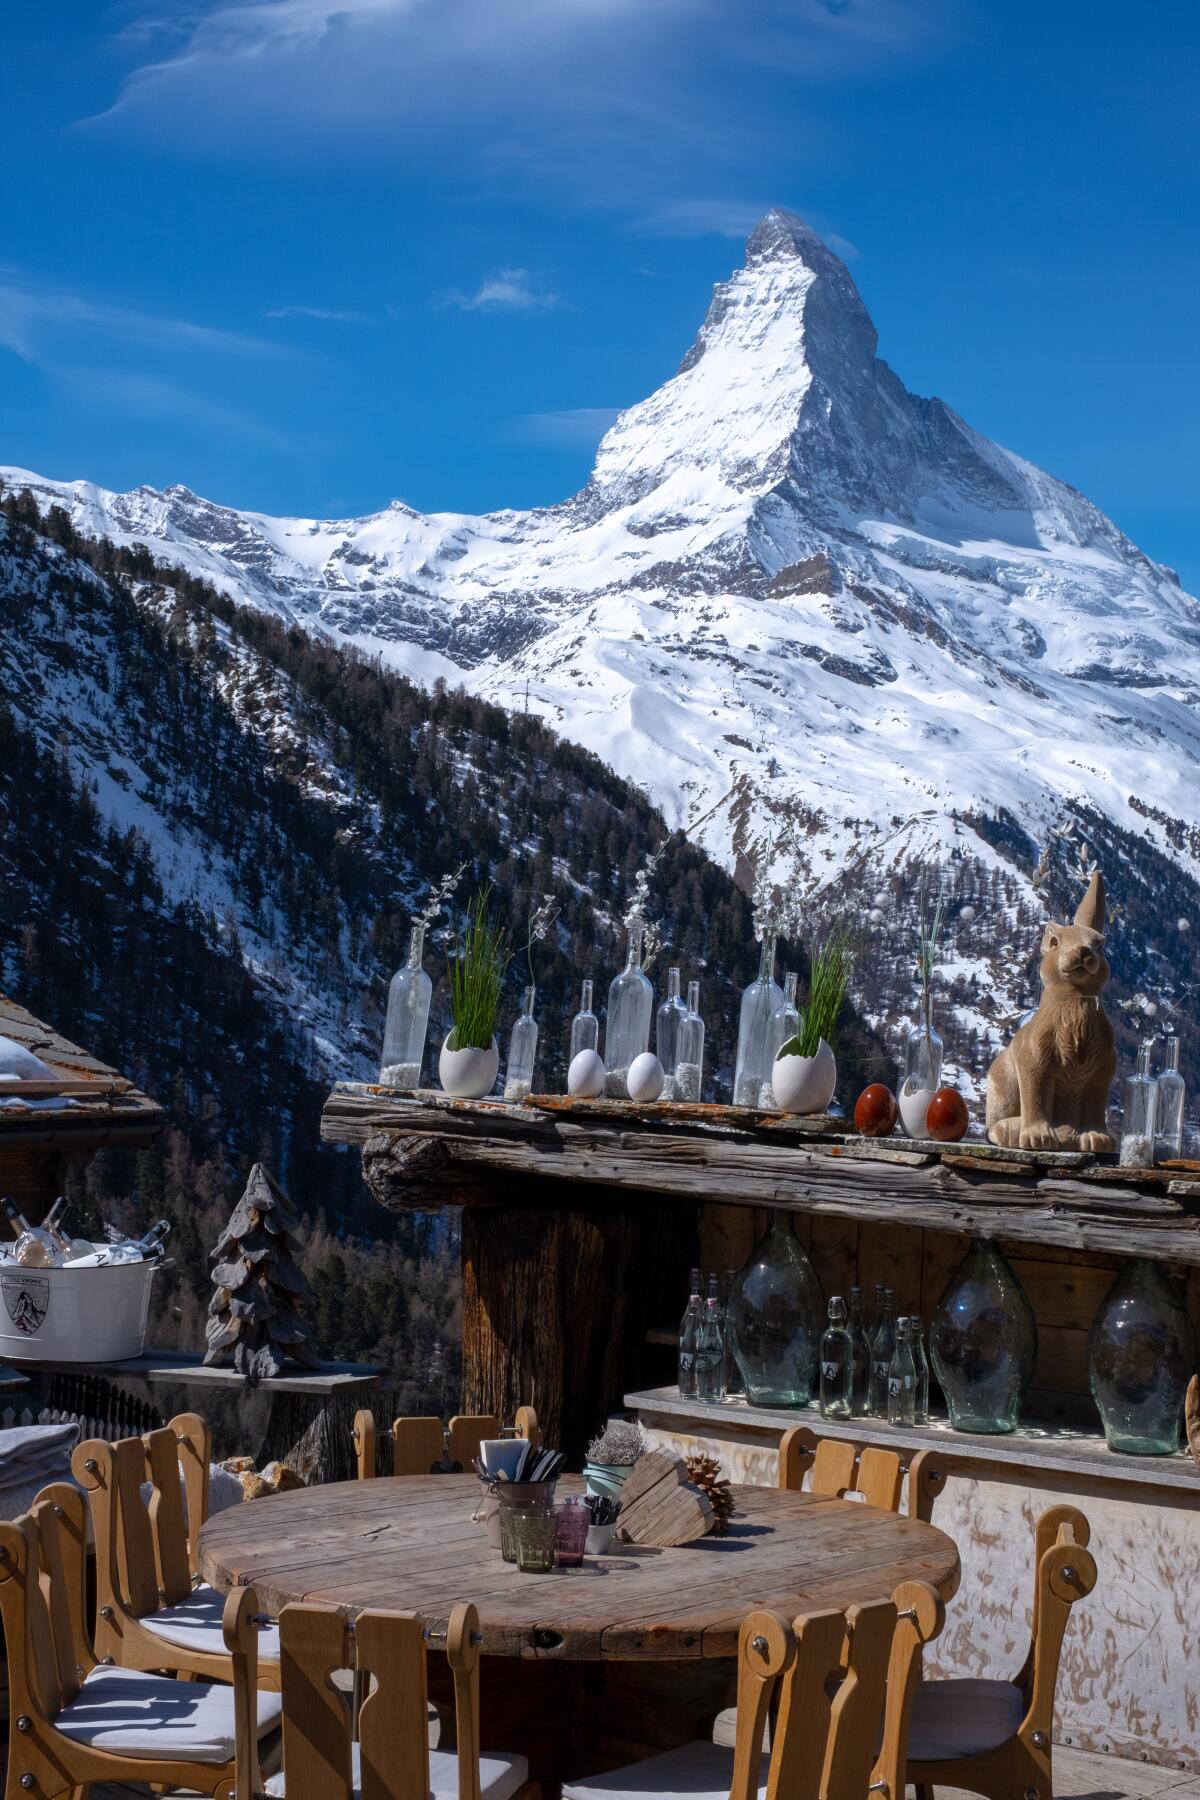 Lunch with a Matterhorn view at Chez Vrony in Zermatt.